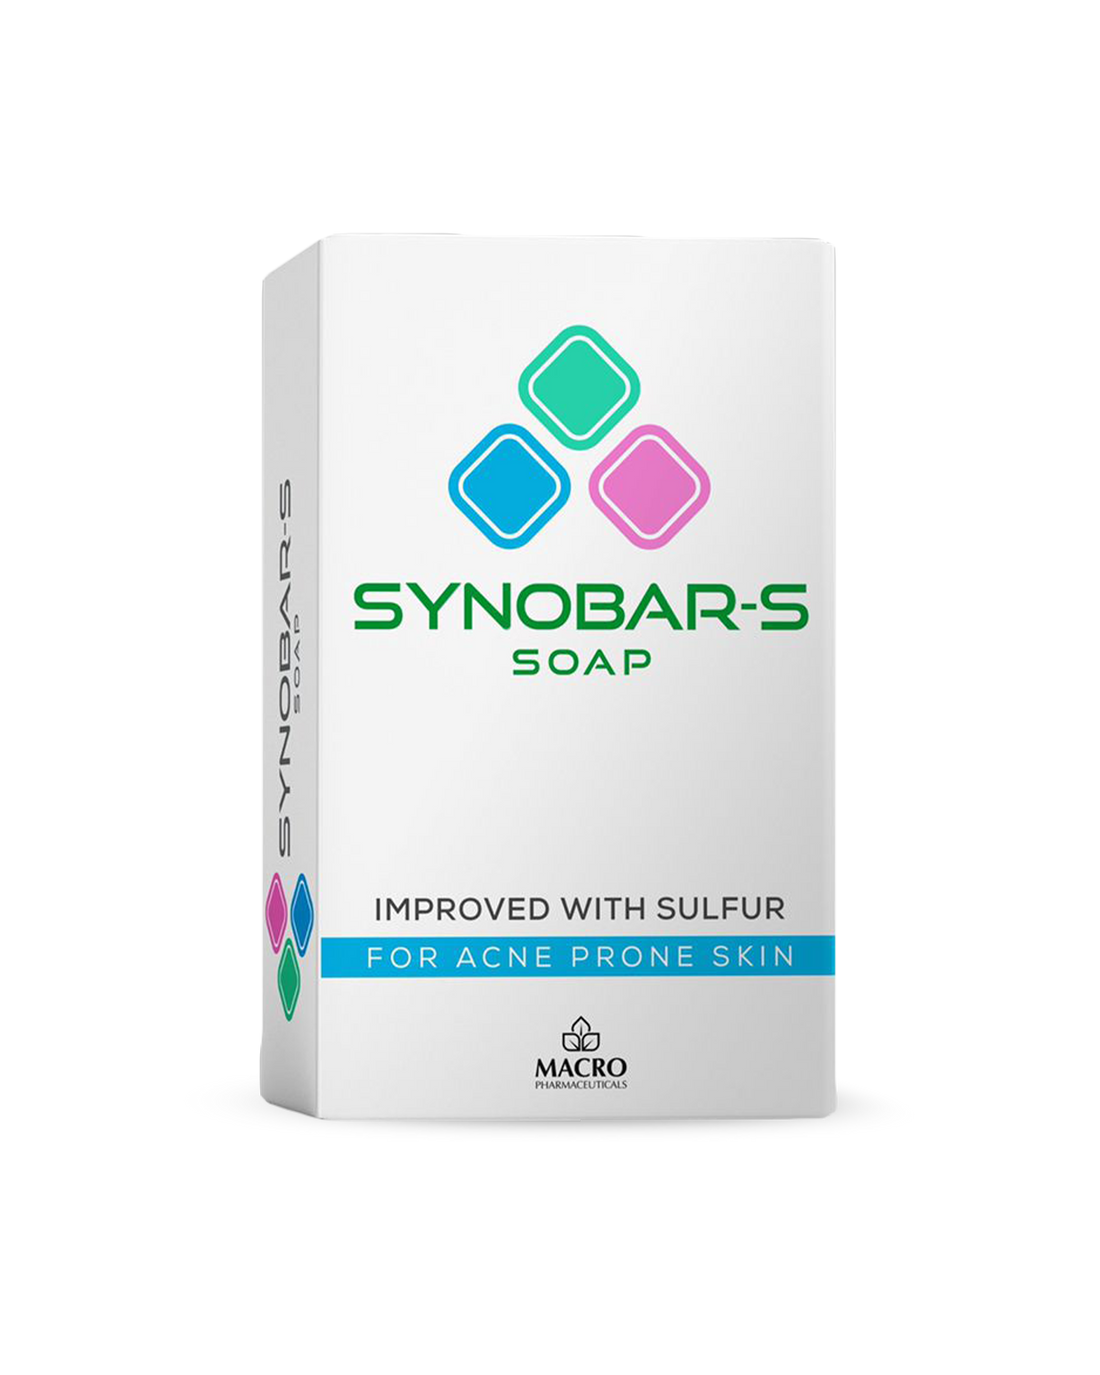 Synobar-S Soap